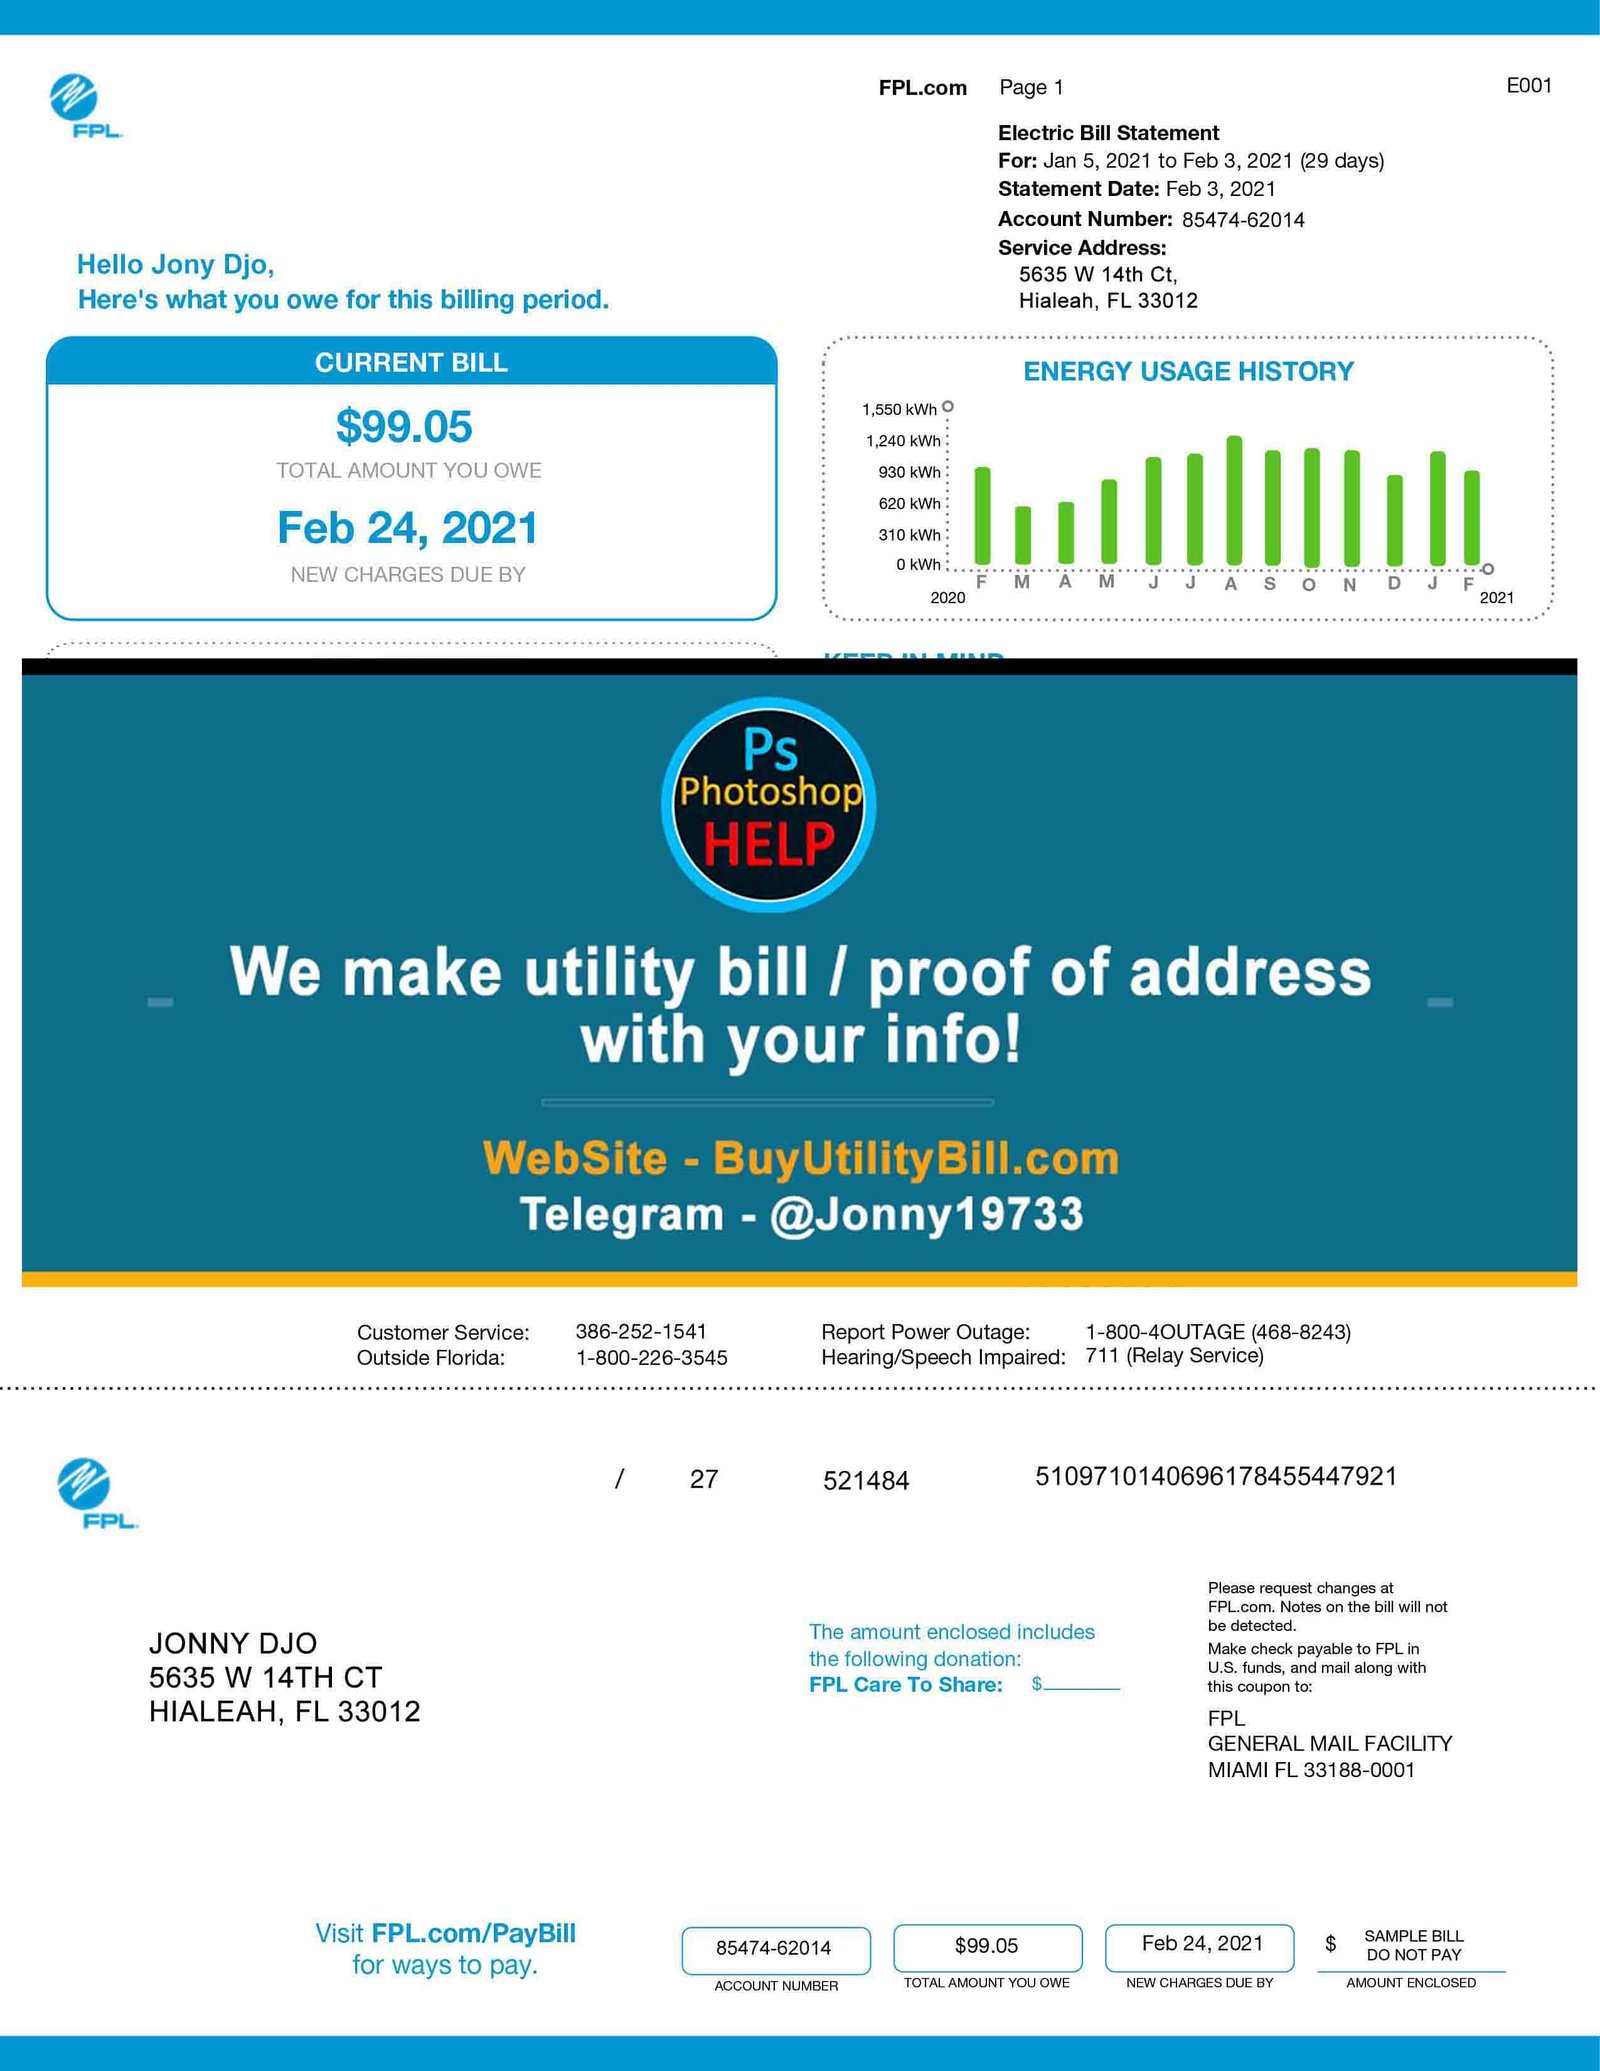 Florida FPL ELectric Bill Statement Fake Utility bill